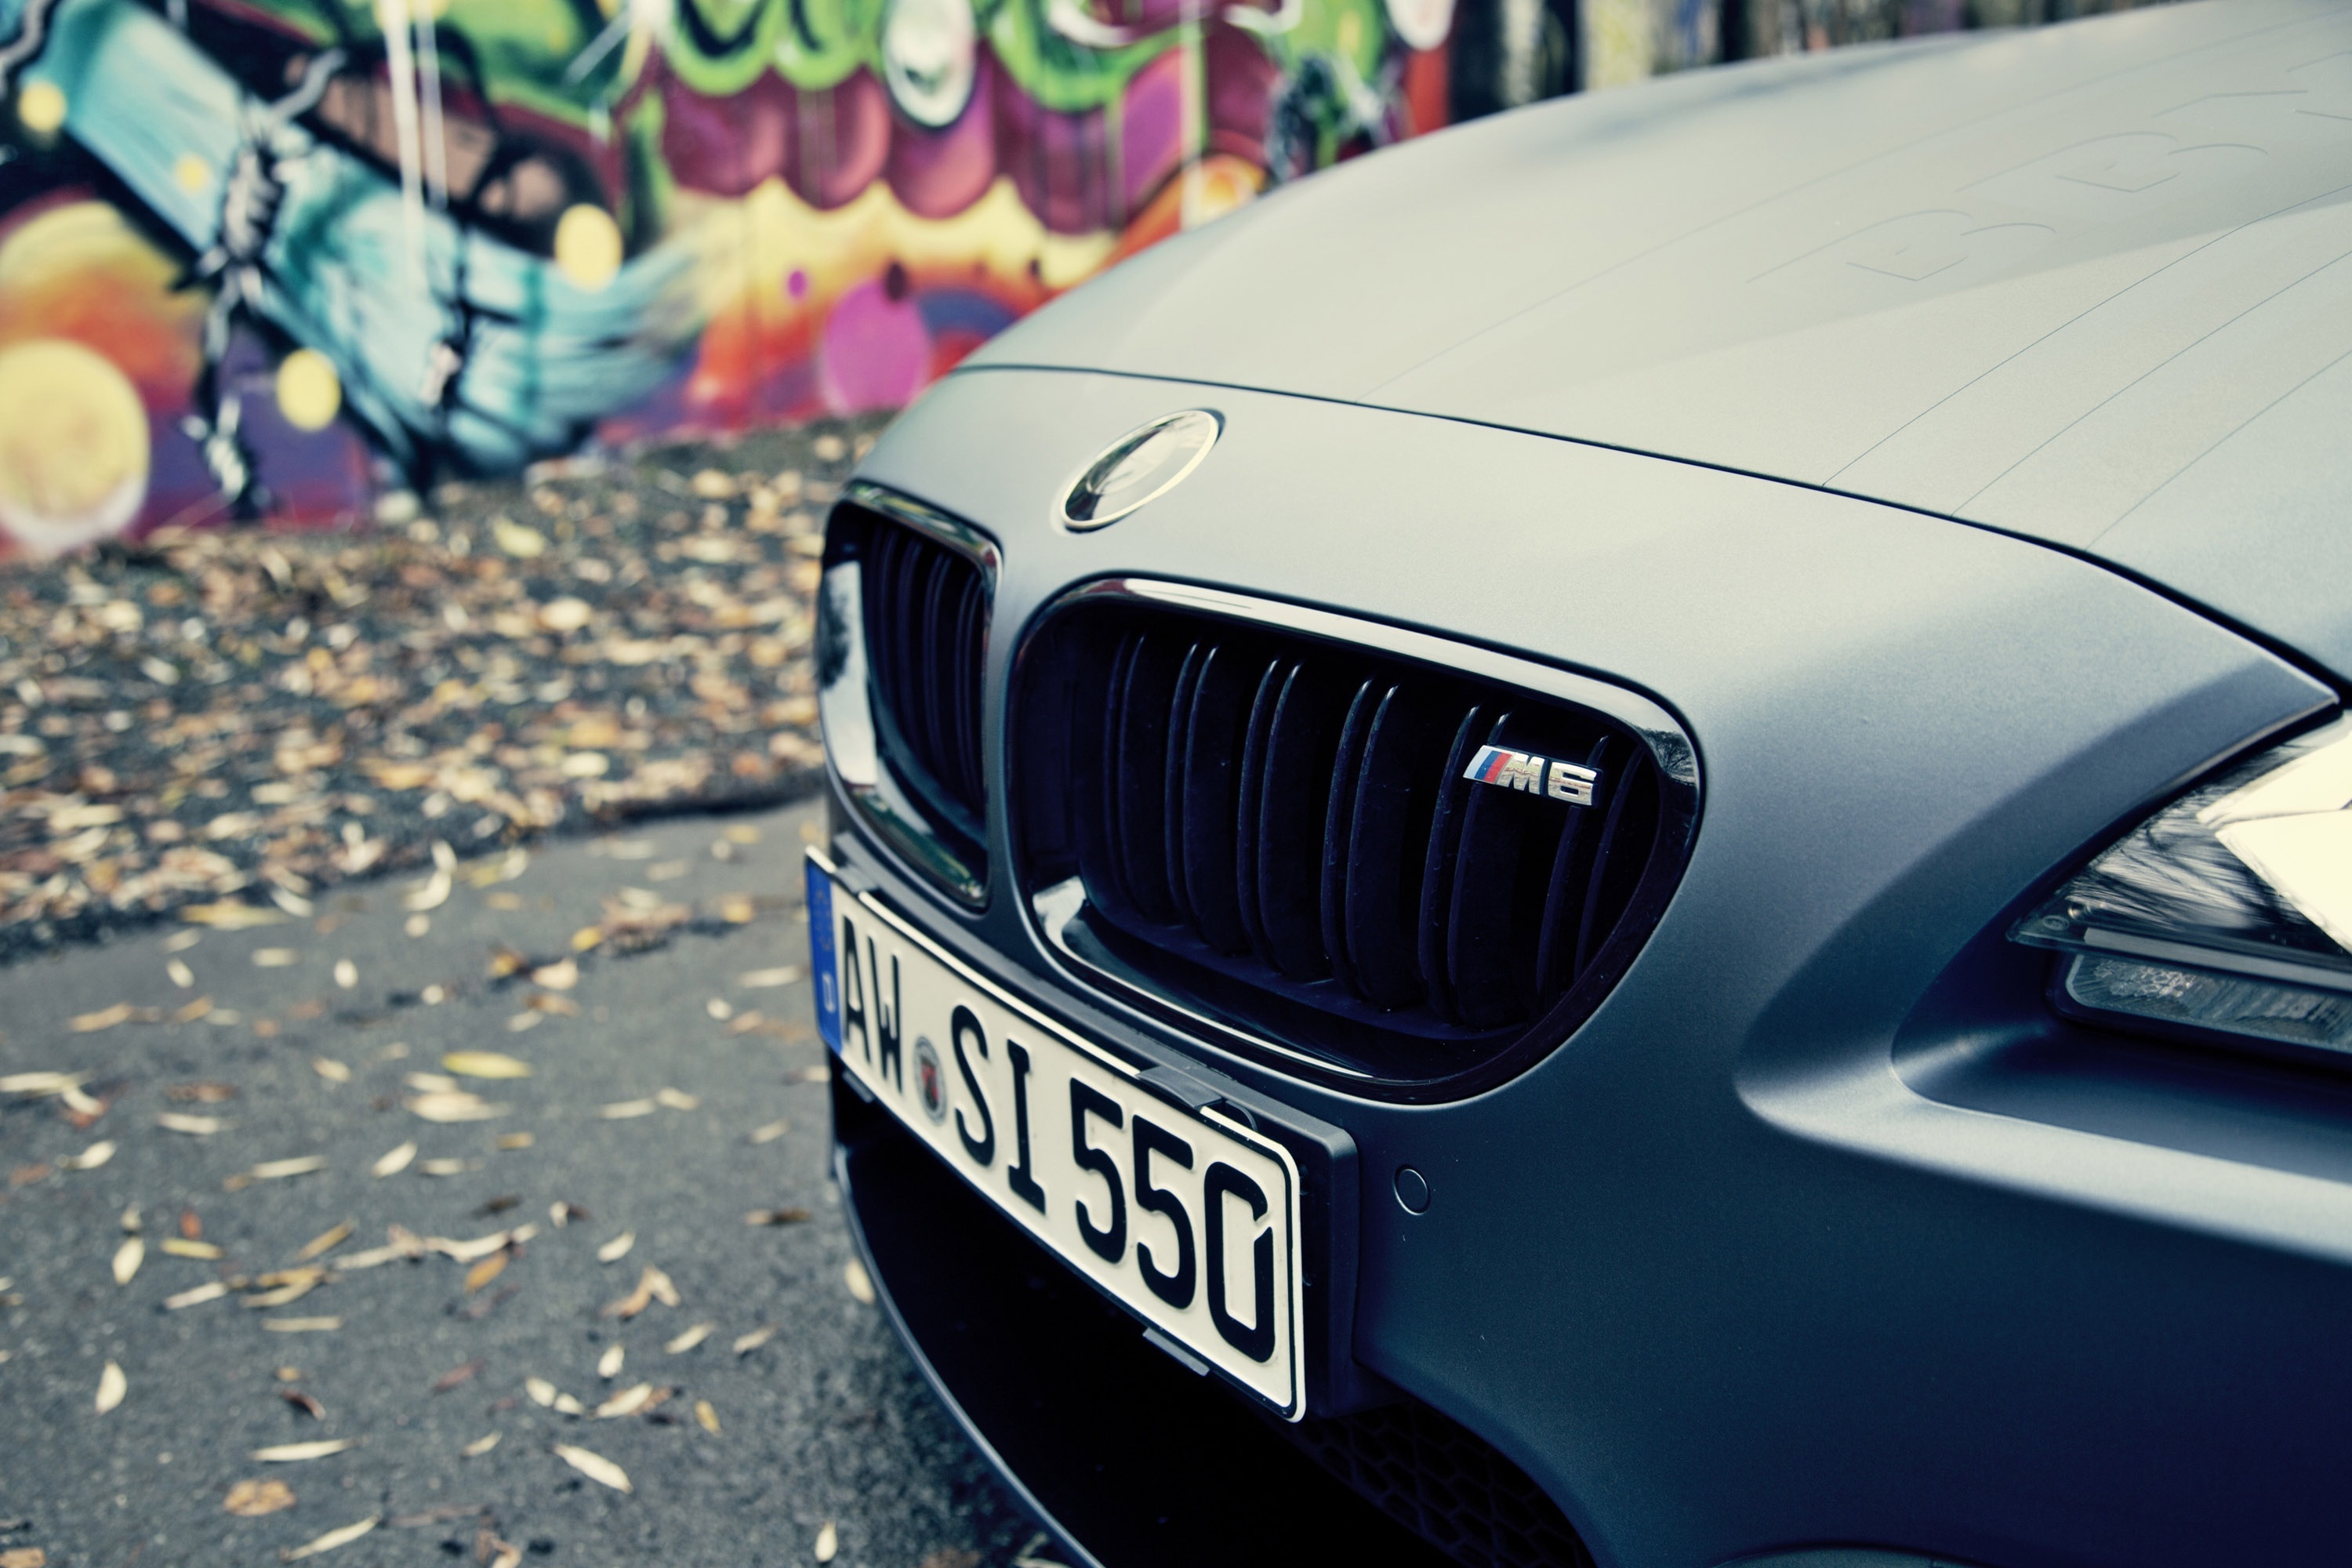 Vehicles BMW M6 HD Wallpaper | Background Image